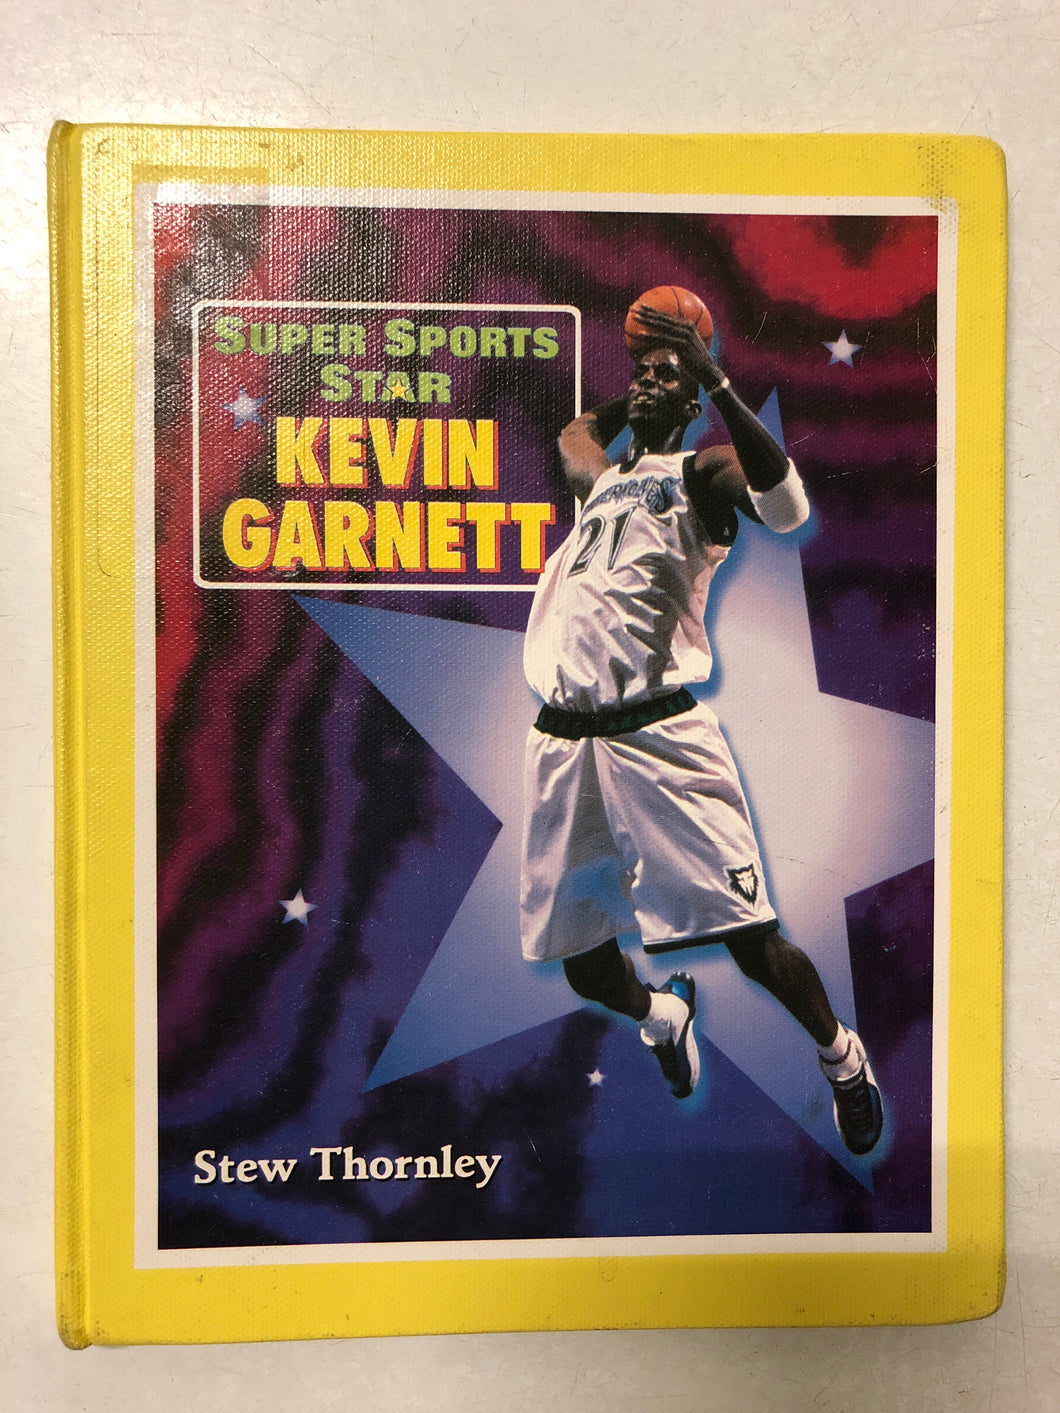 Super Sports Star Kevin Garnett - Slick Cat Books 